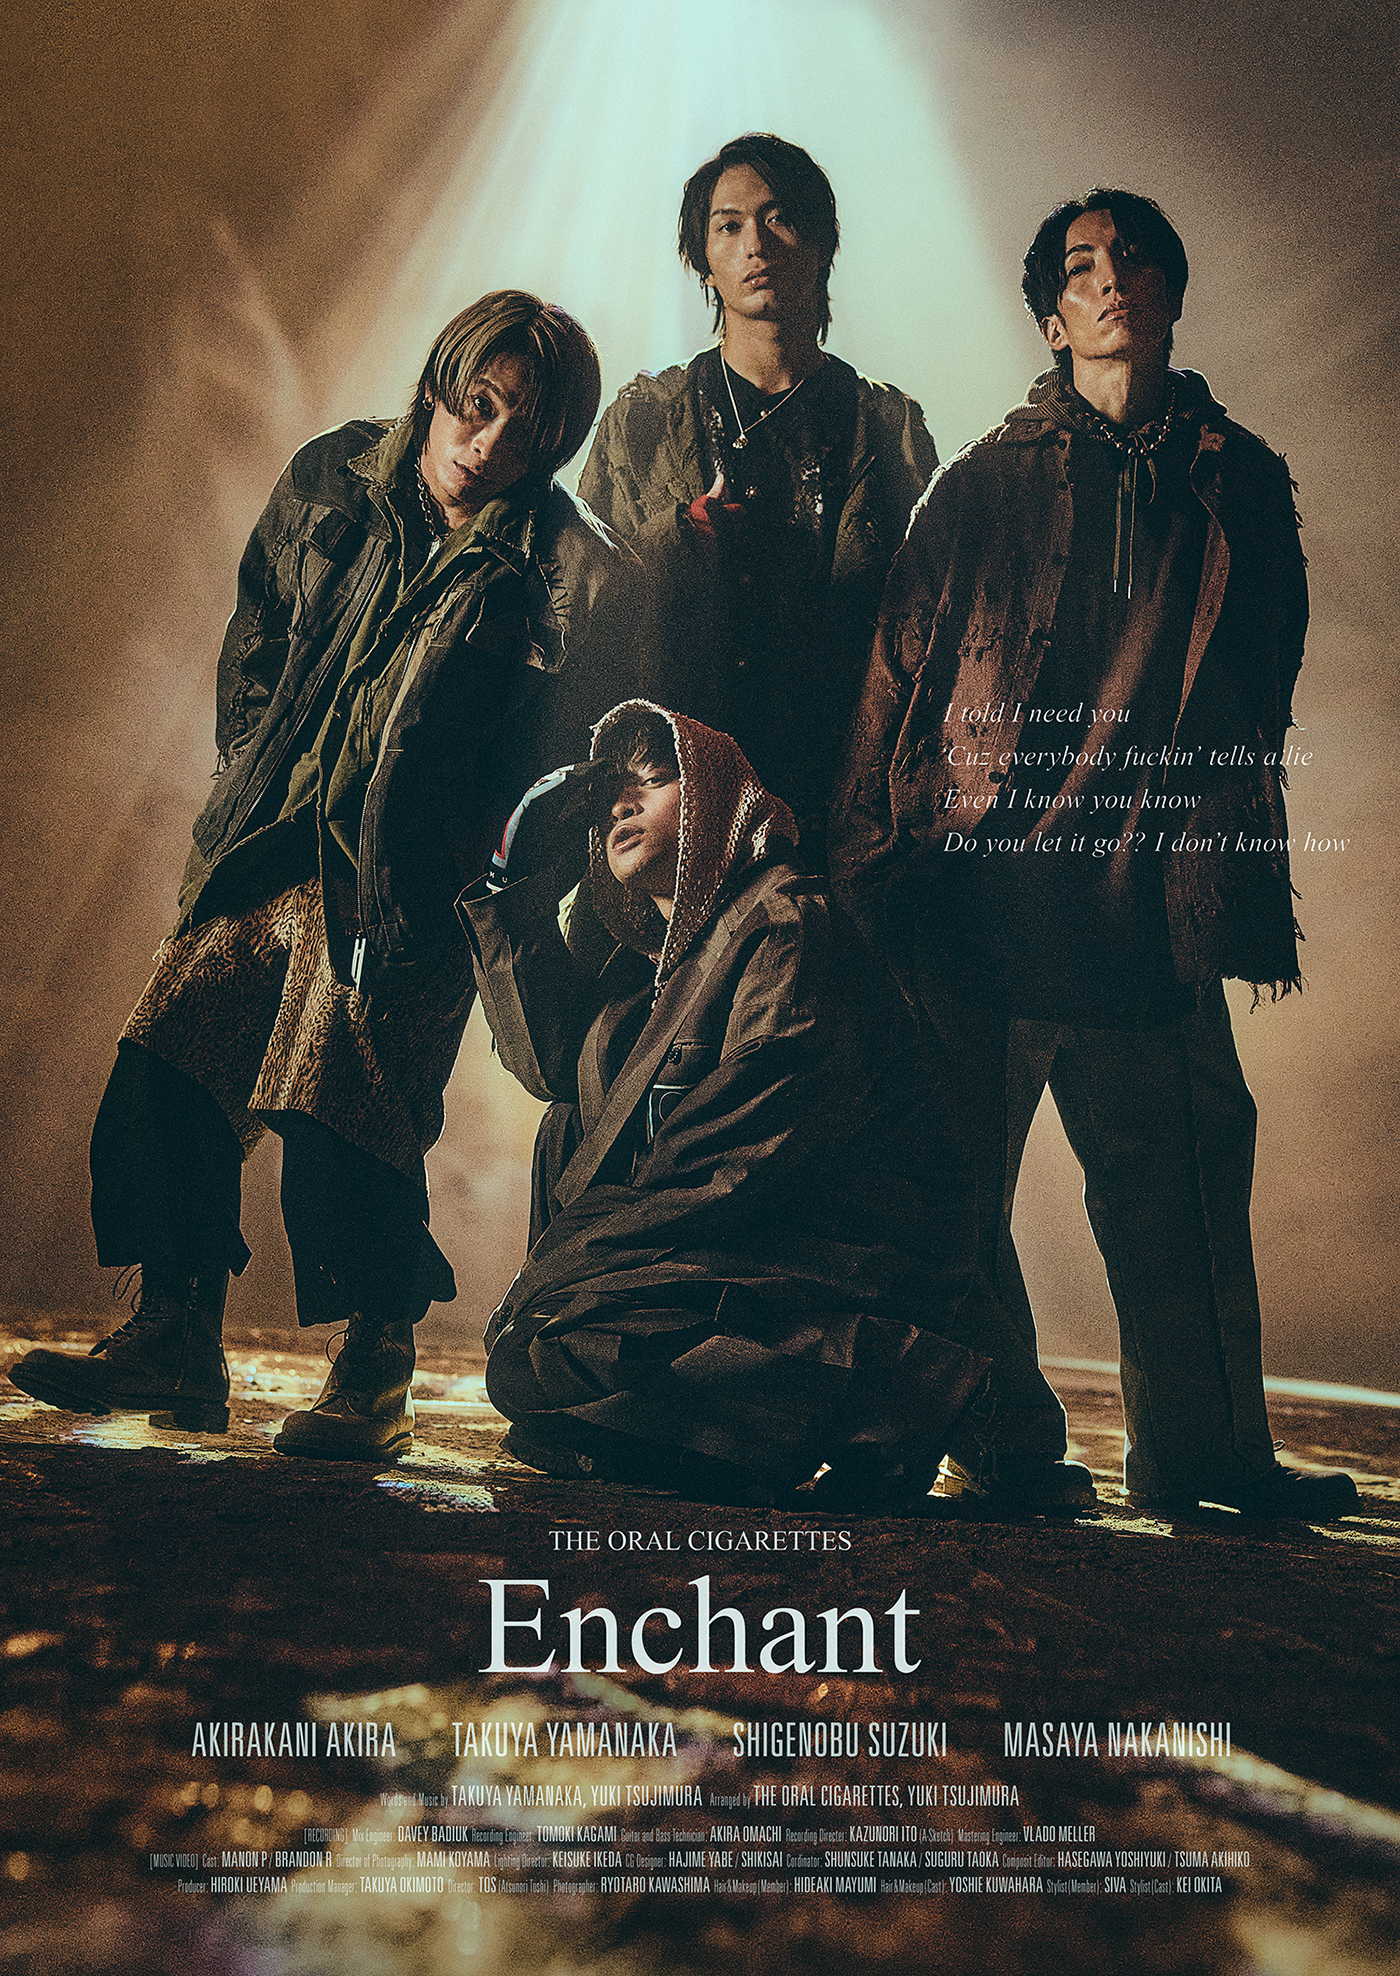 THE ORAL CIGARETTES、新曲「Enchant」MVのプレミア公開が決定 - 画像一覧（1/1）